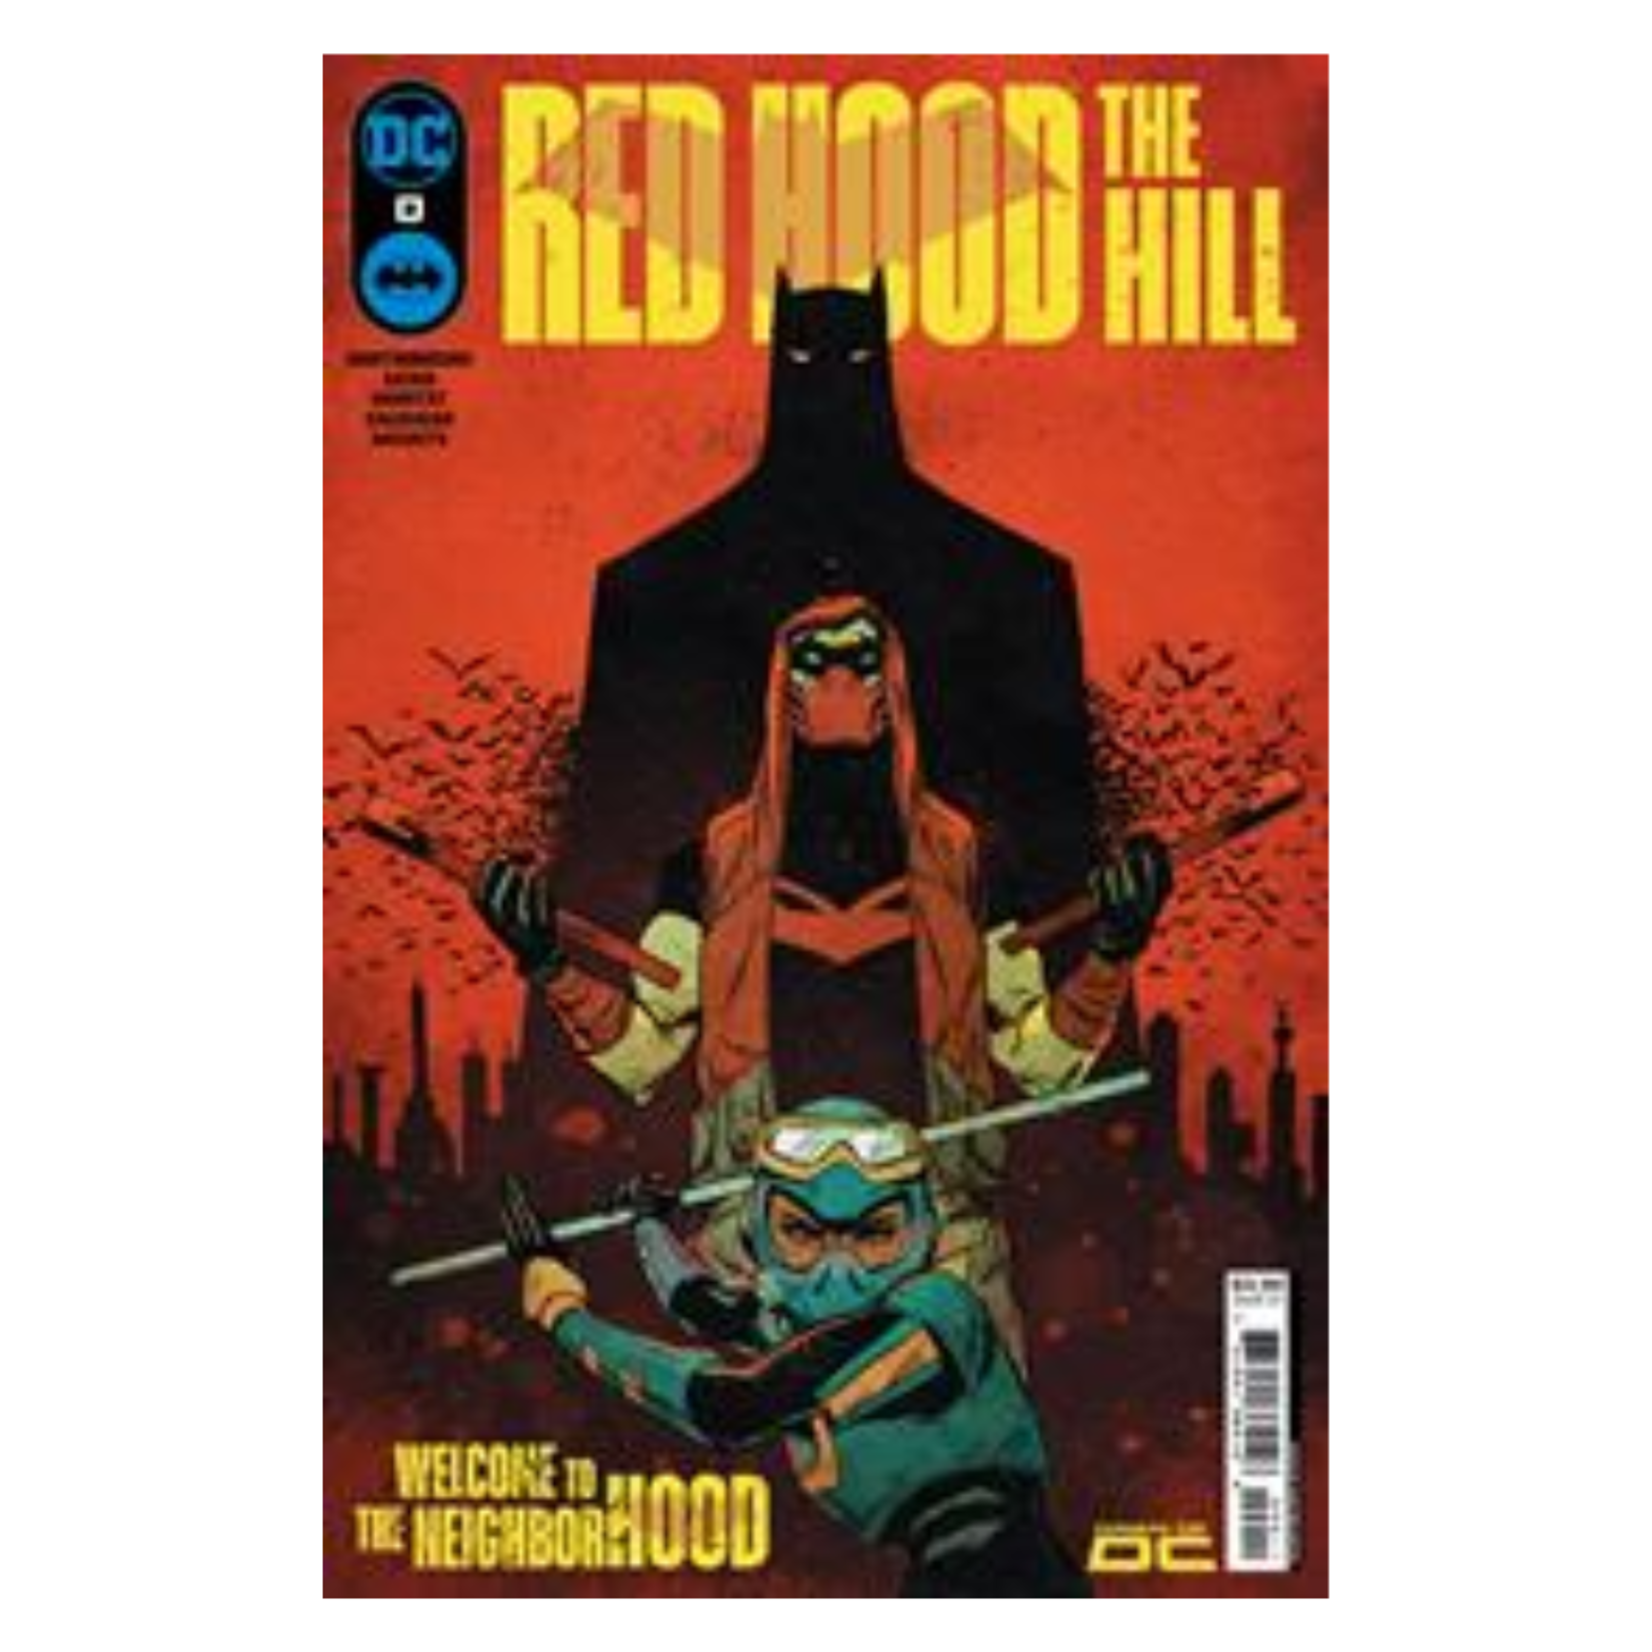 DC Comics Red Hood The Hill #0